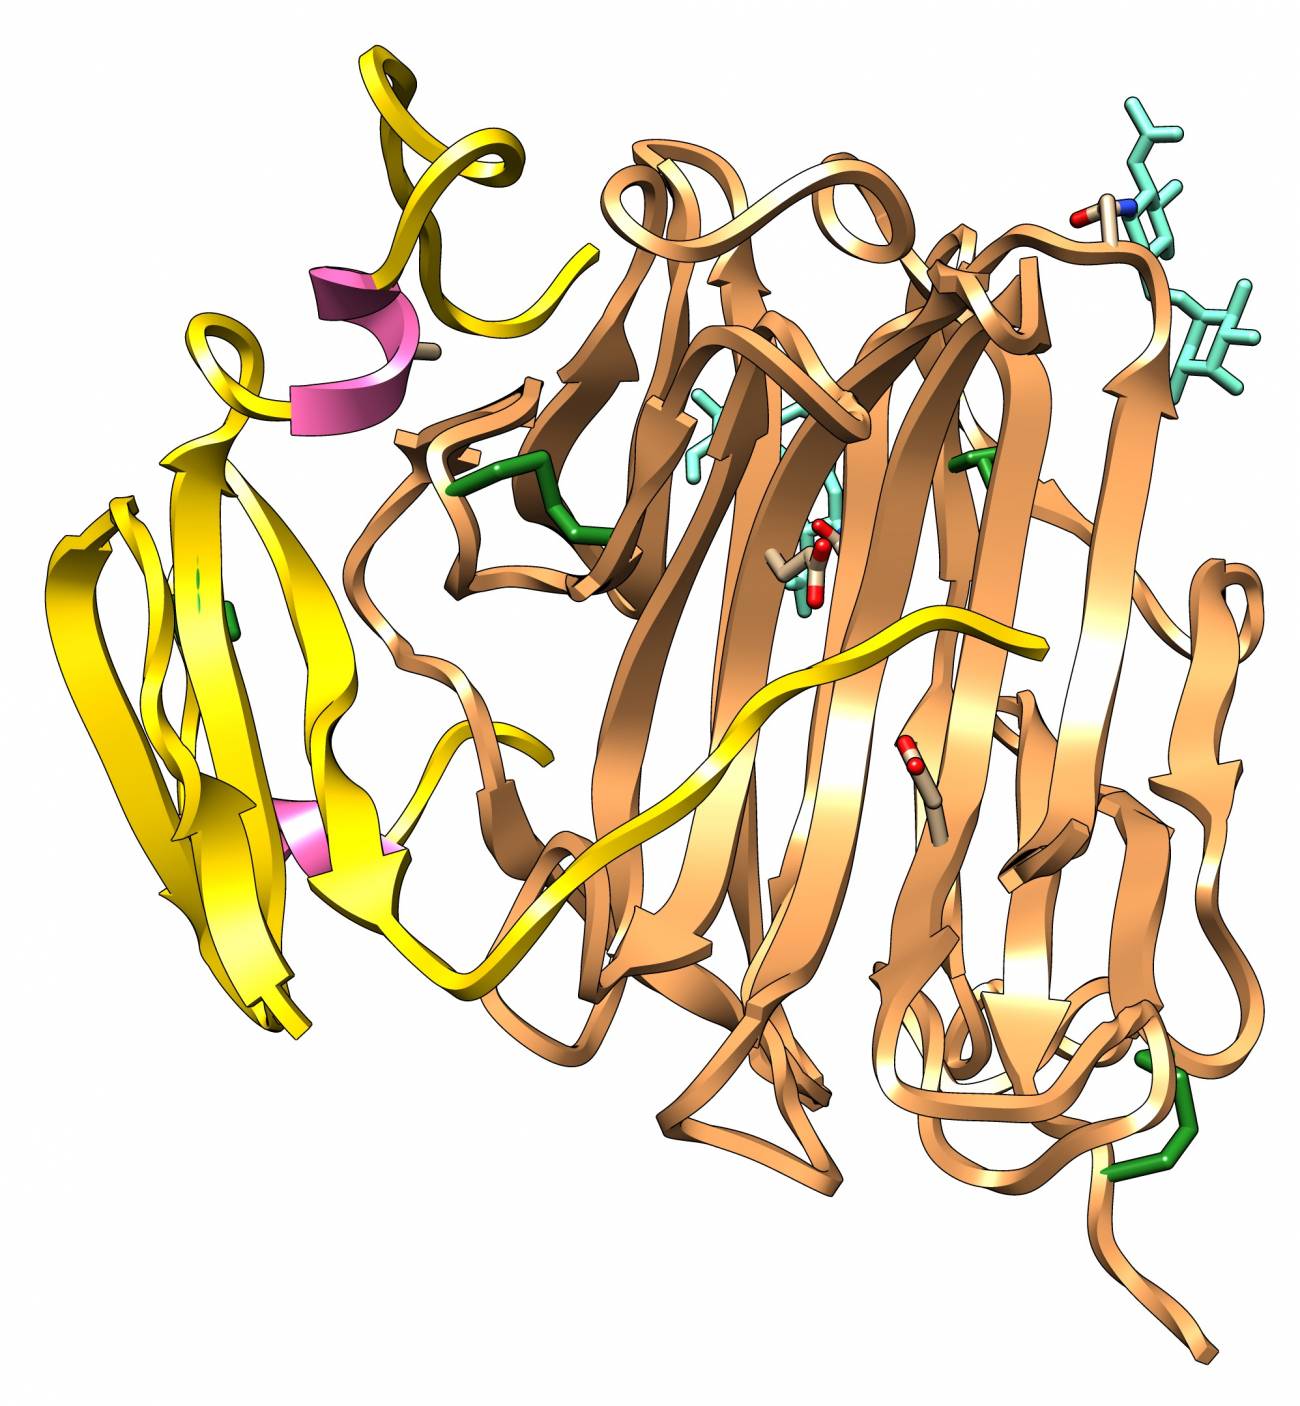 Estructura tridimensional del precursor de la neprosina. / IBMB